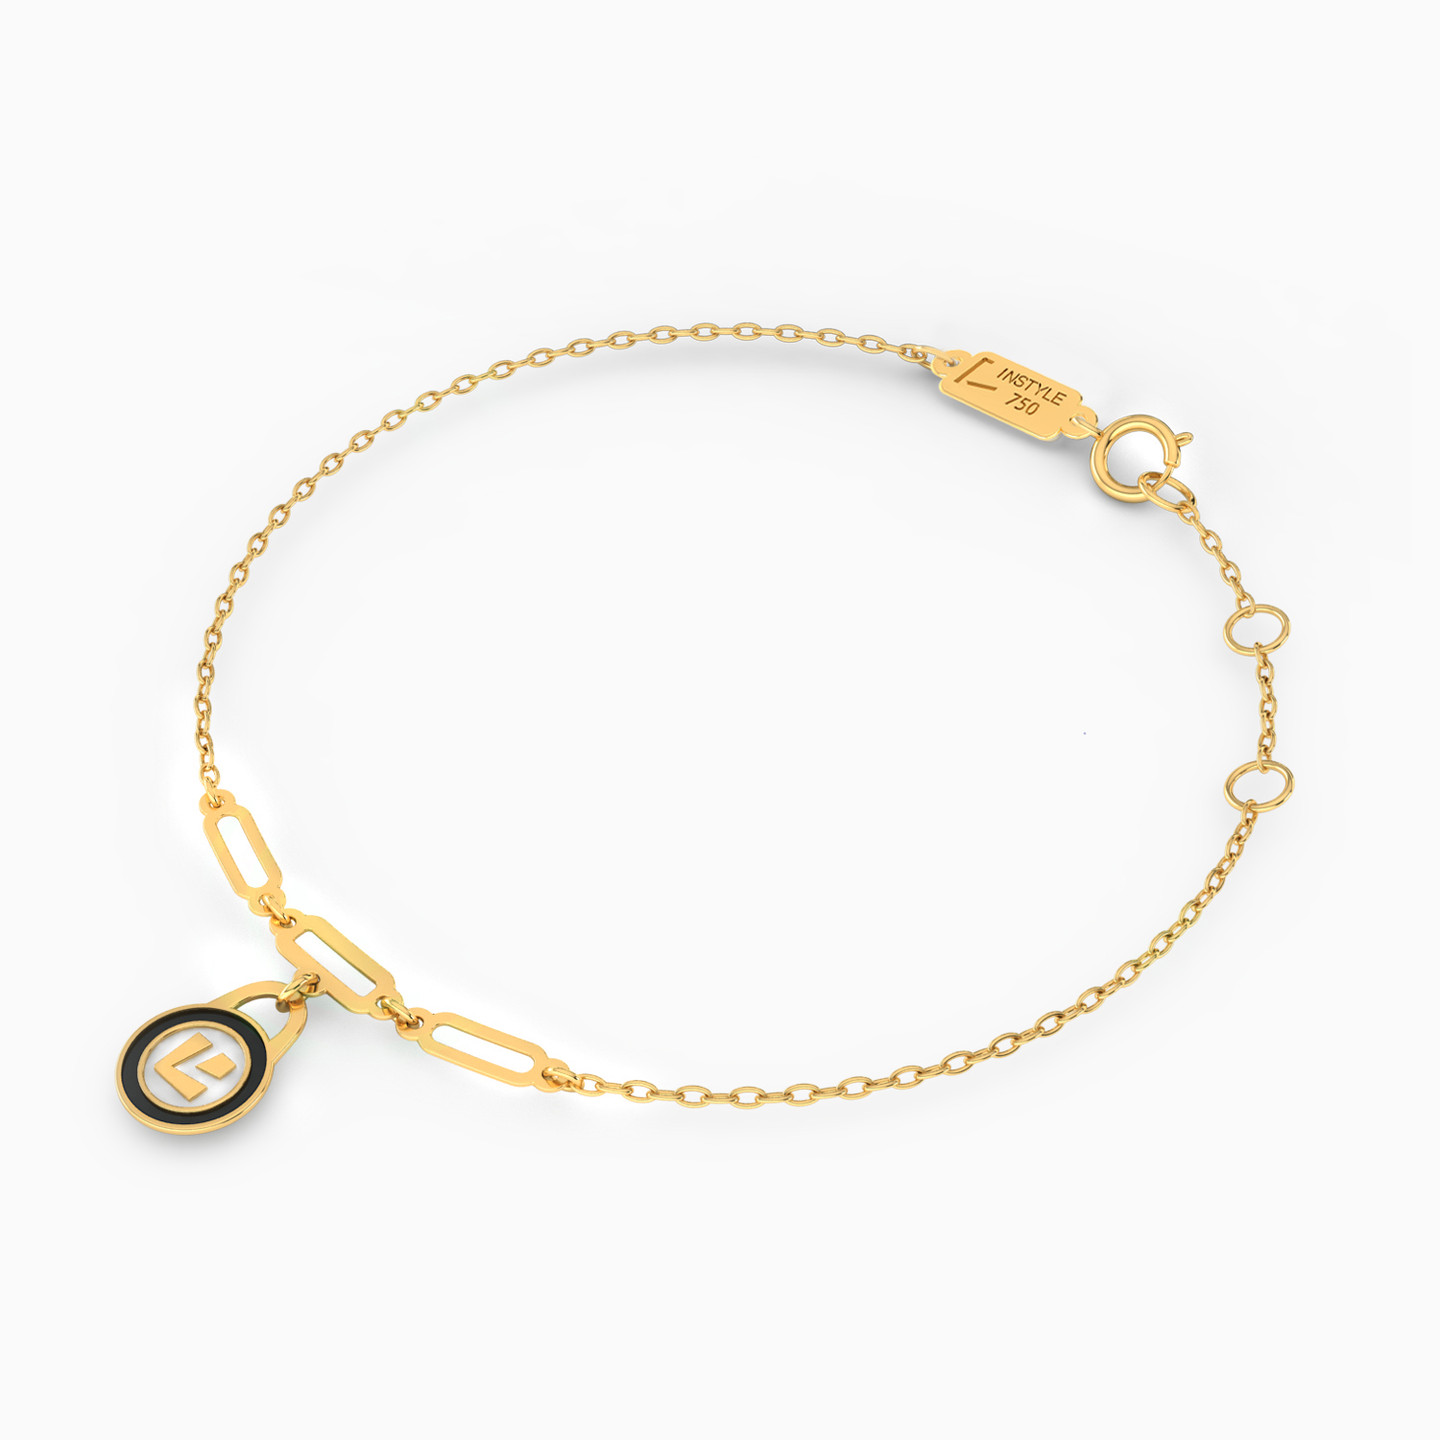 18K Gold Colored Stones Chain Bracelet - 2